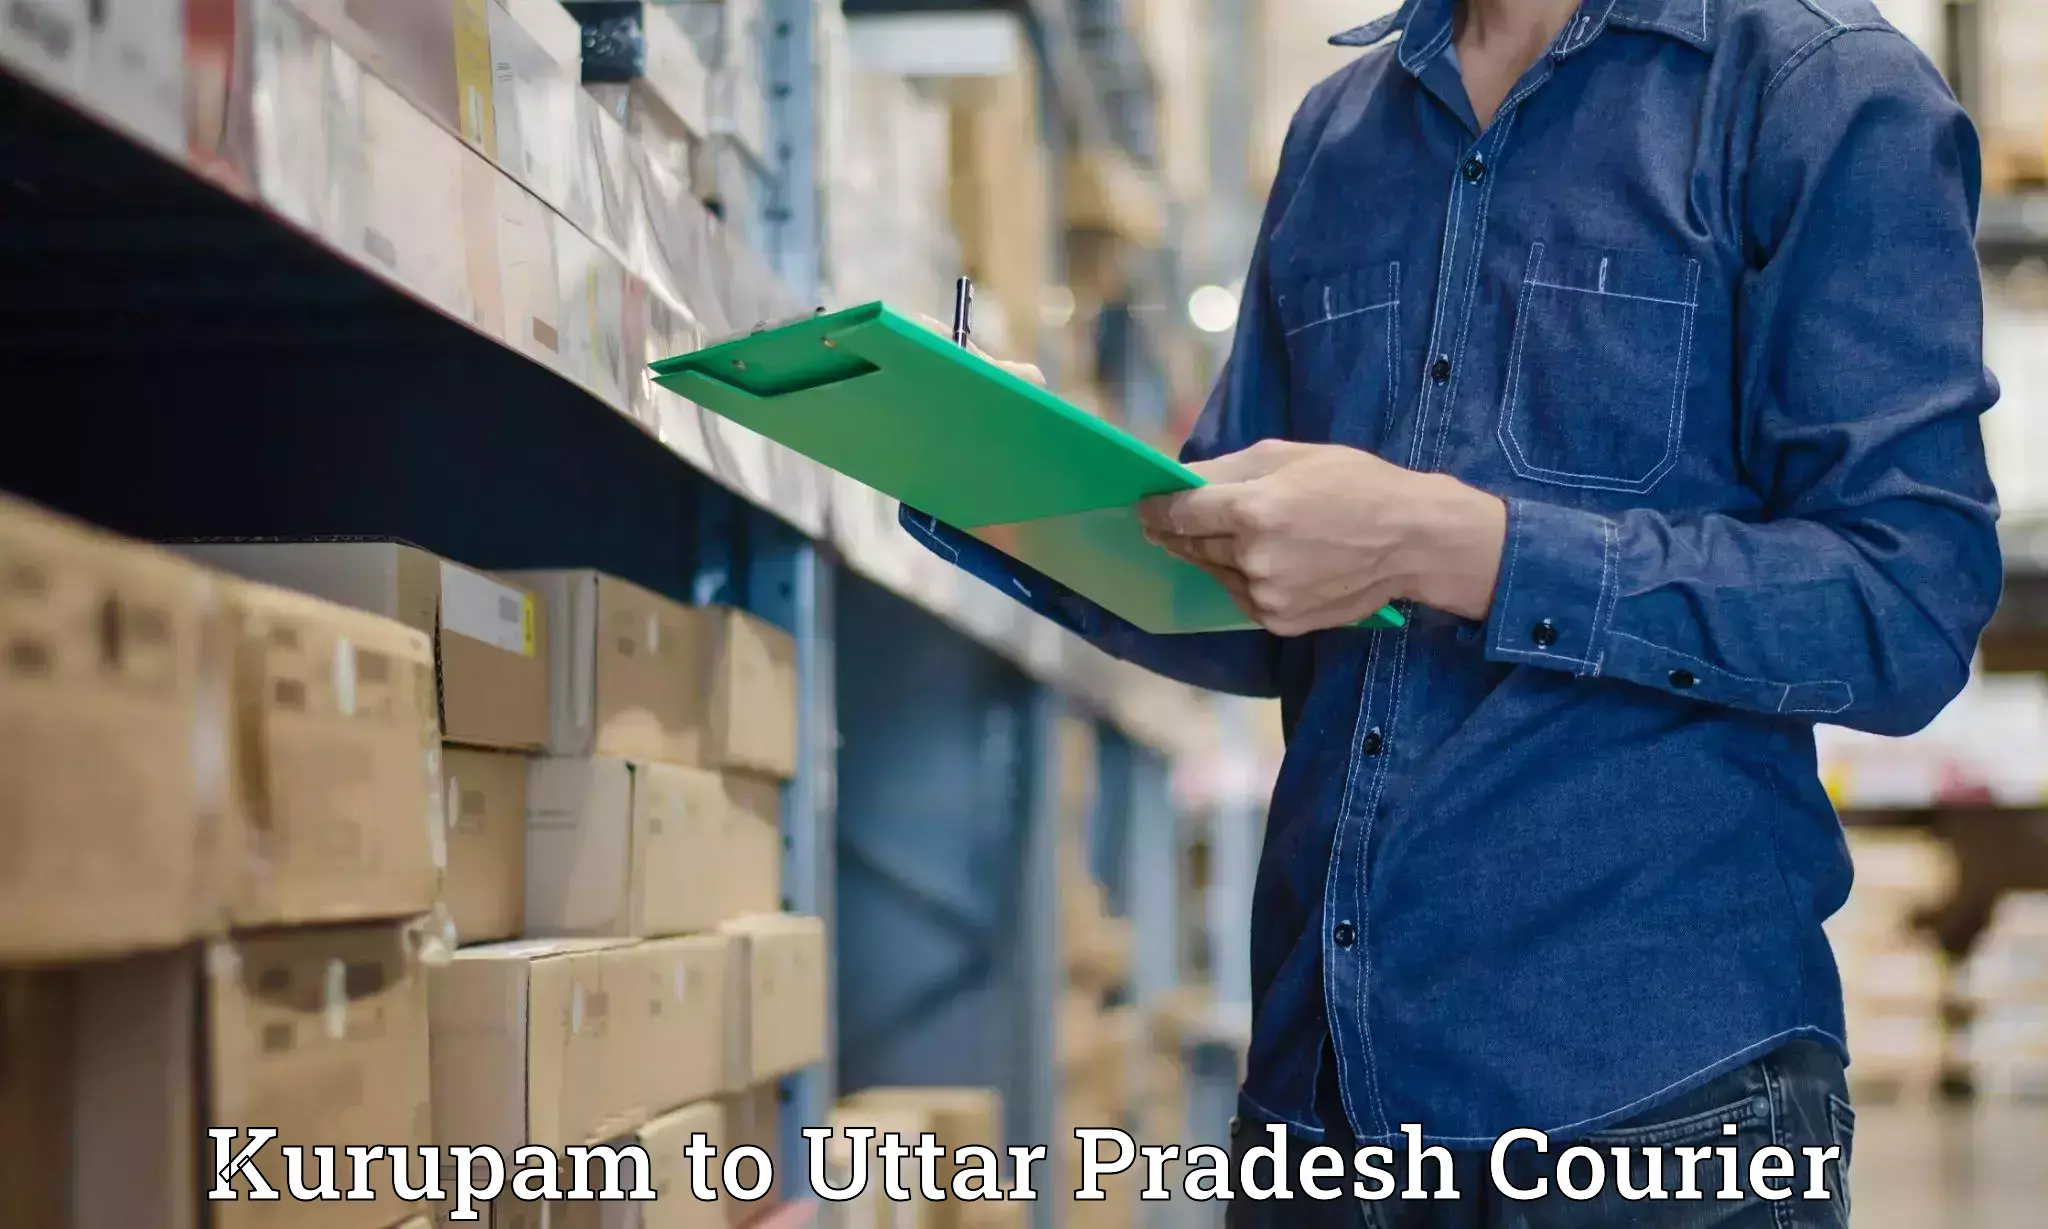 Small business couriers Kurupam to Aligarh